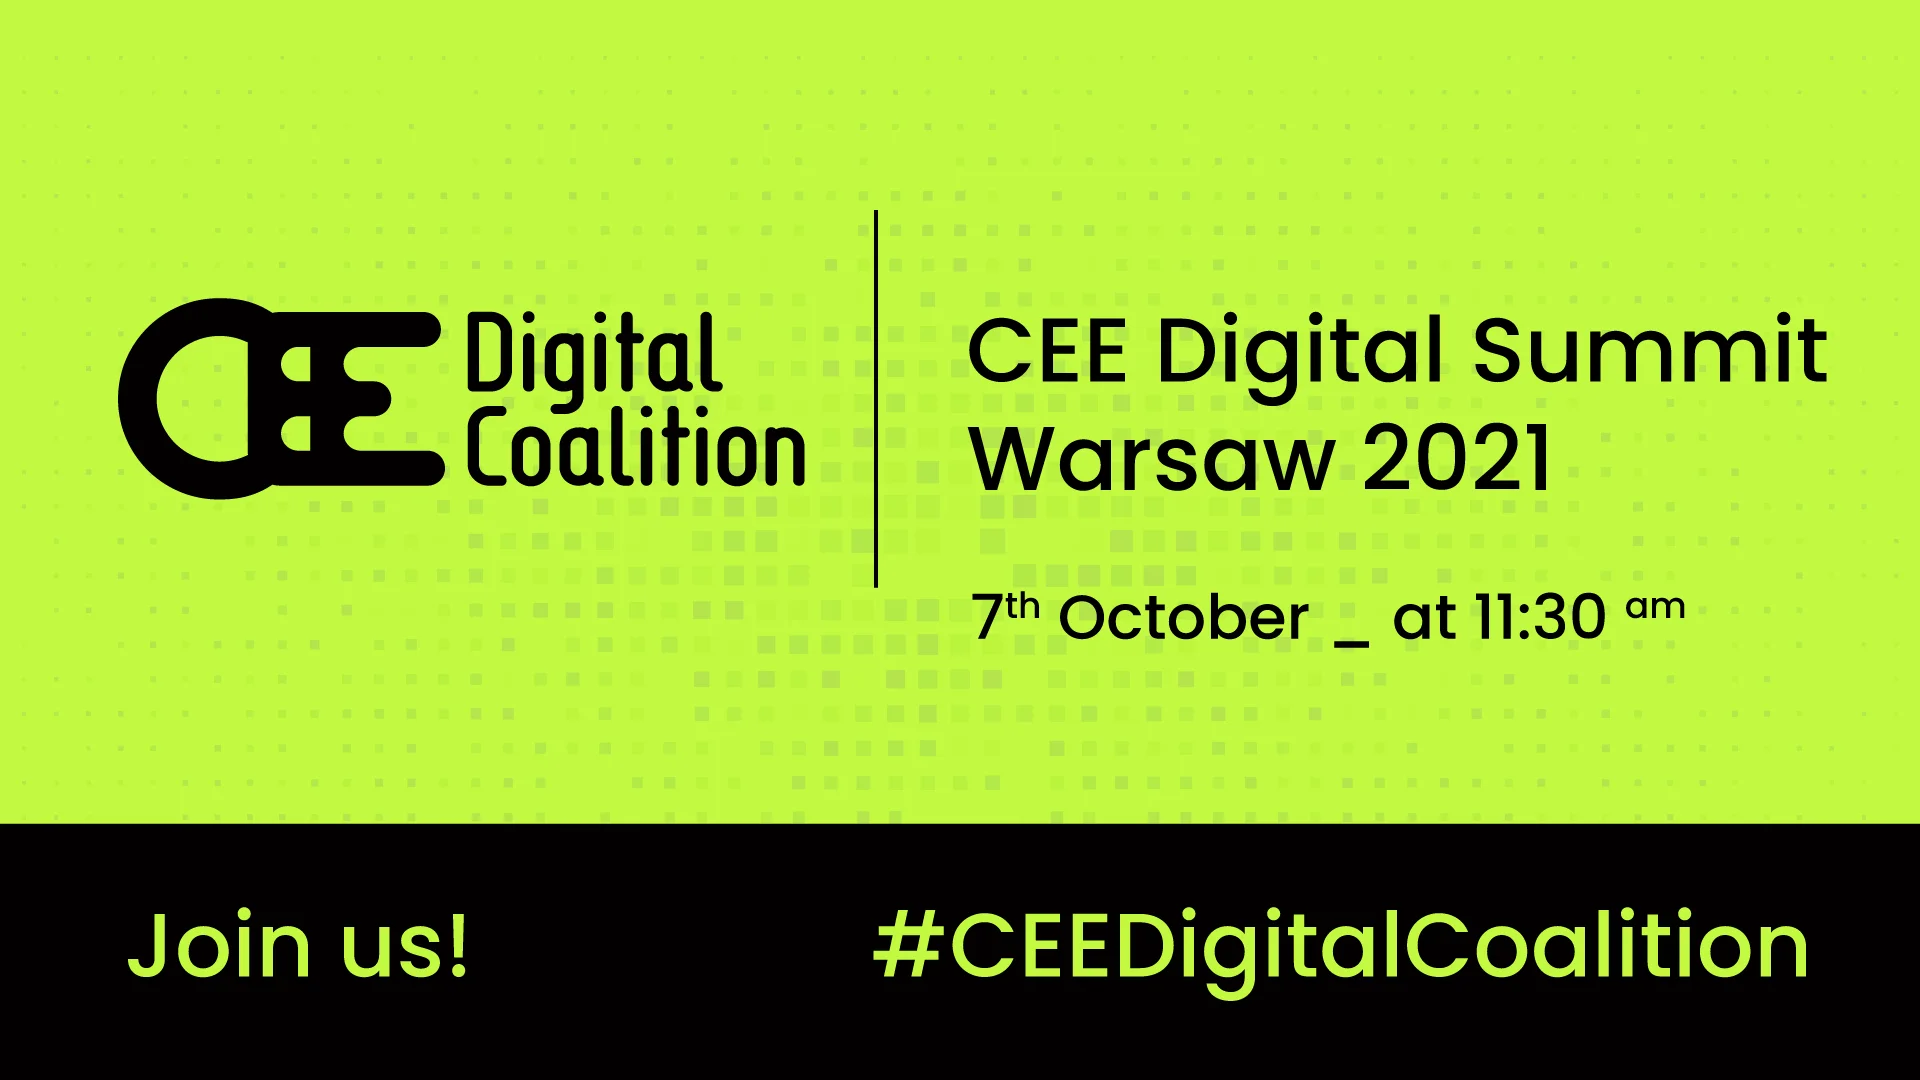 Cyfrowe Trójmorze, CEE Digital Summit